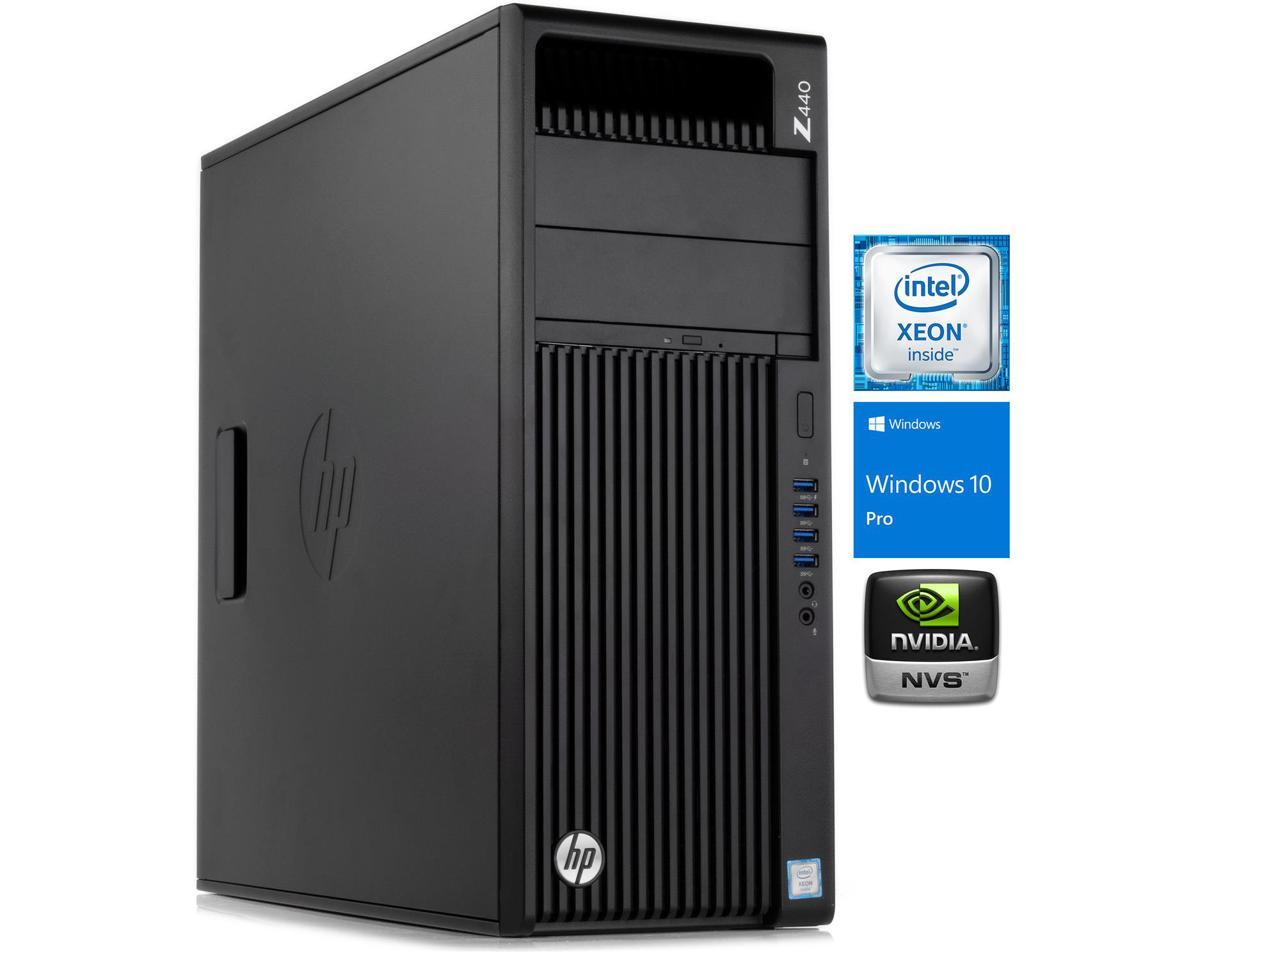 HP Z440 Workstation - Xeon E5-1620v3 @ 3.5Ghz (4 cores), 16GB RAM, 512GB SSD, Quadro K2200 4GB, Win10 Pro *Refurbished*